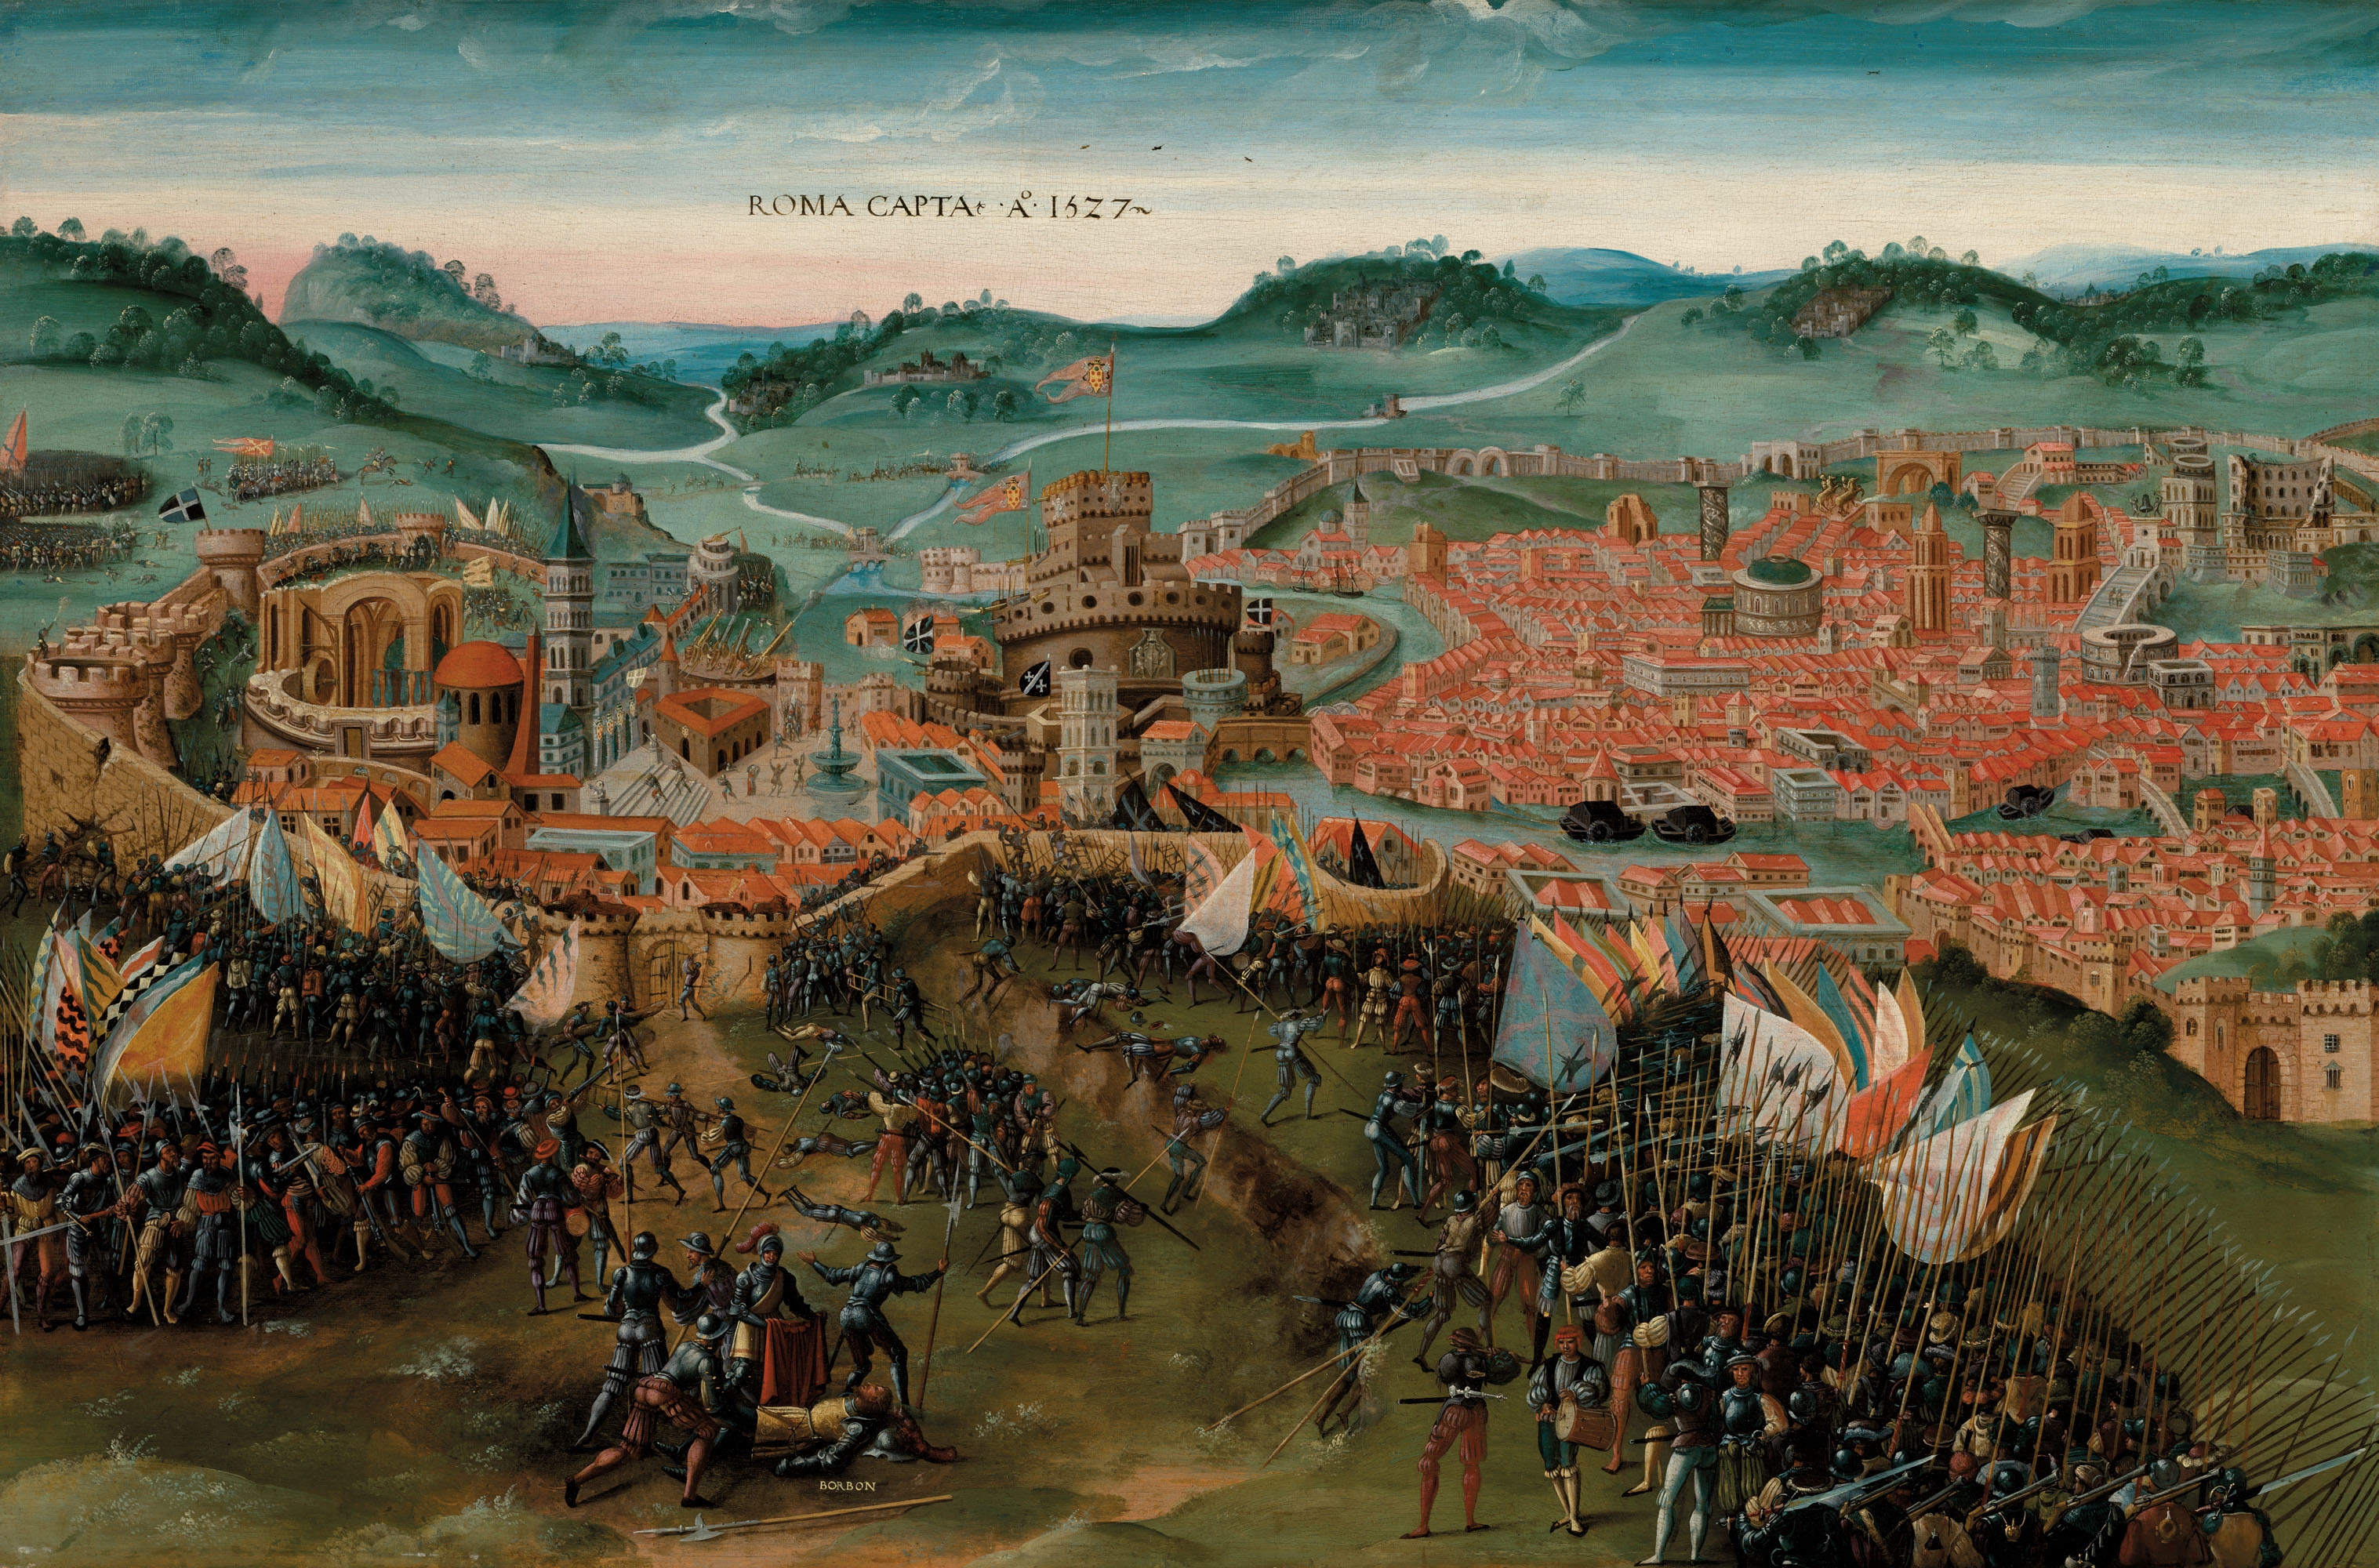 German School, 16th century - The Battle of Pavia